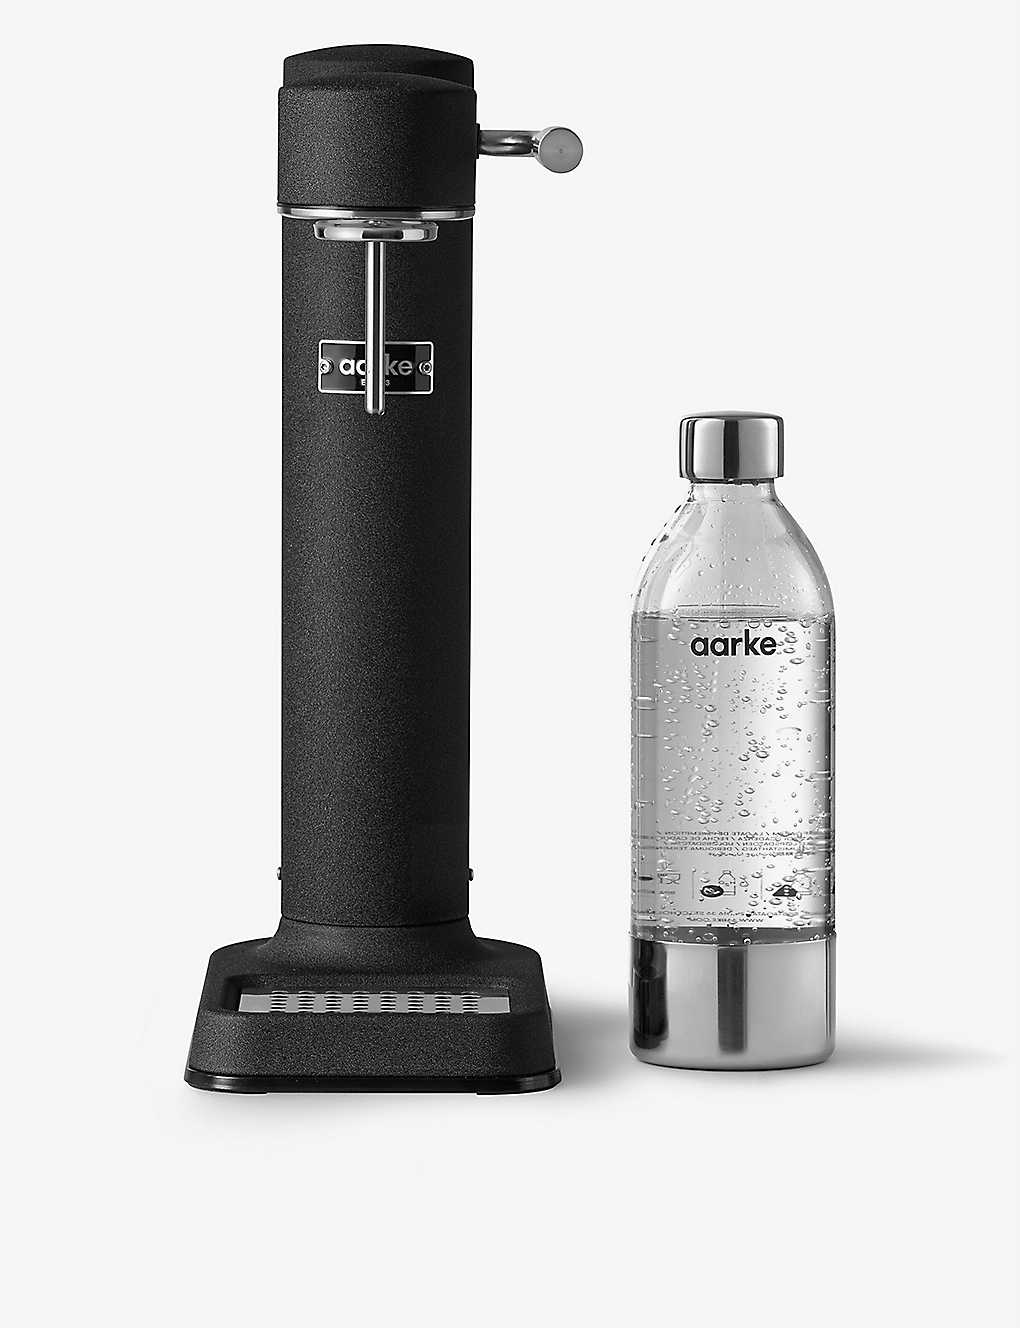 AARKE Carbonator 3 瑞典進口氣泡水機-霧黑色